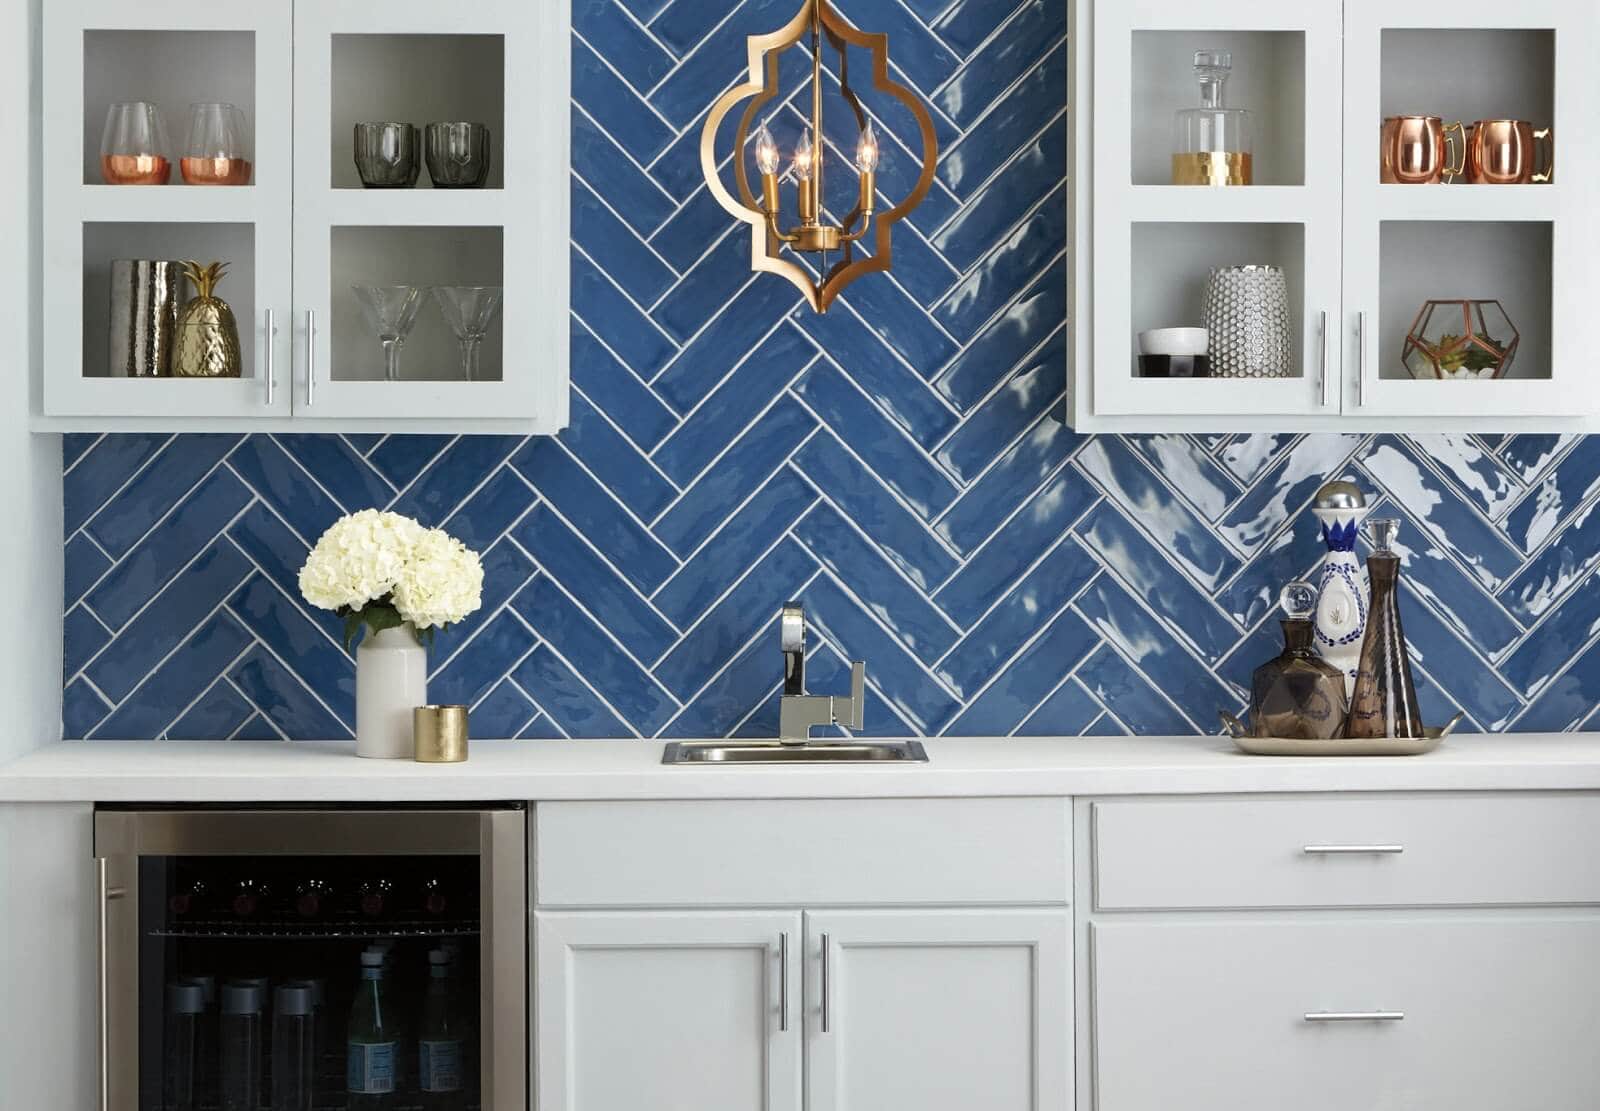 Kitchen backsplash with blue ceramic tile in a herringbone pattern